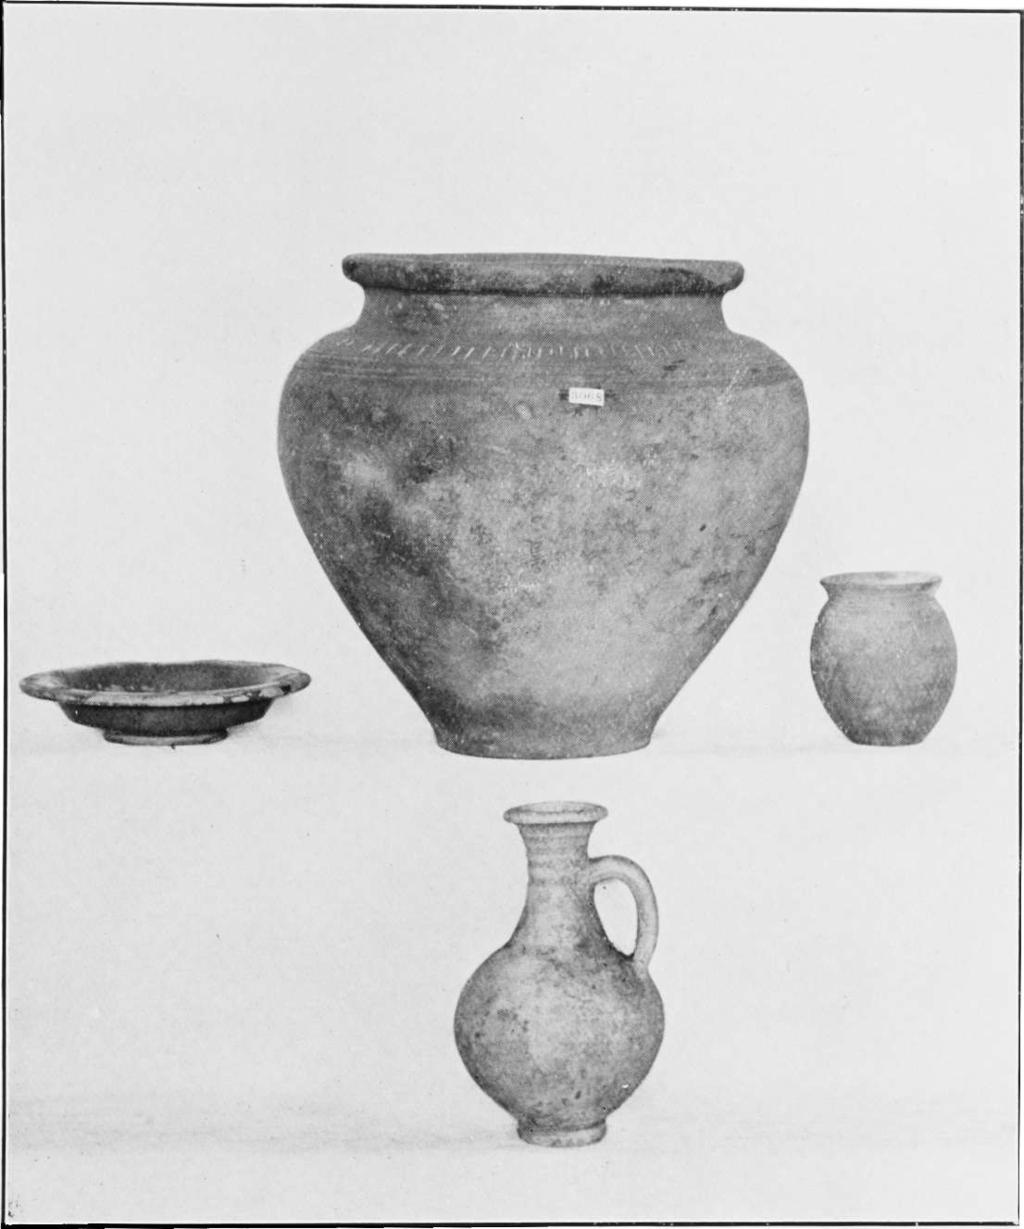 Plate I. Burial Group 1. Four associated objects, i.e. Cinerary Urn, Jug, Beaker, and Samian Ware Dish.